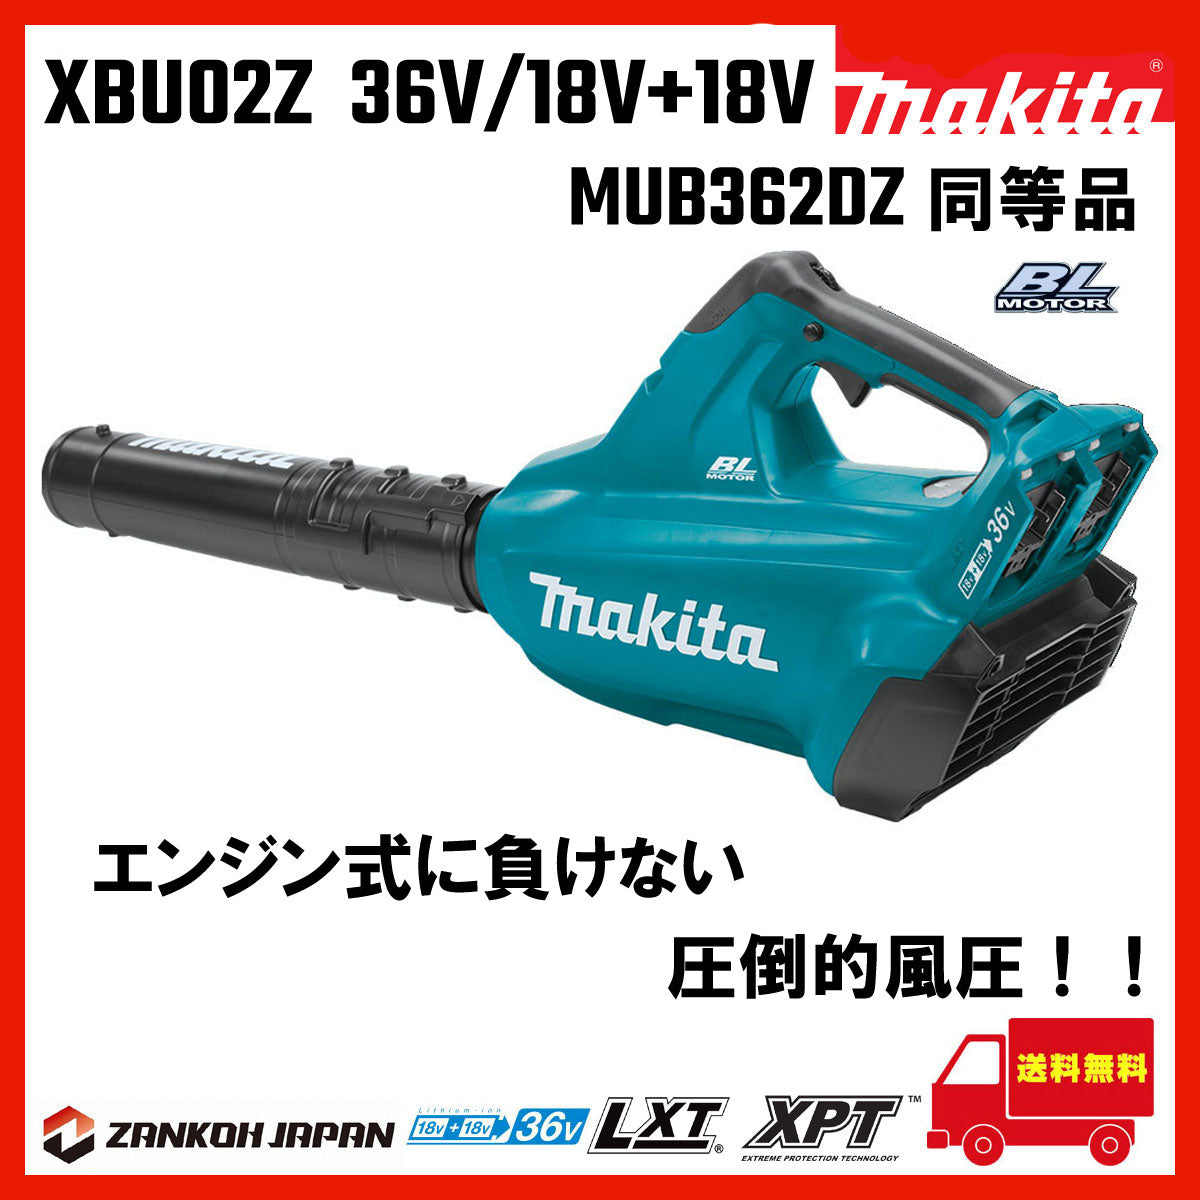 マキタ ブロワ 充電式 MUB362DZ 同等品 XBU02Z MAKITA 36V/18V+18V